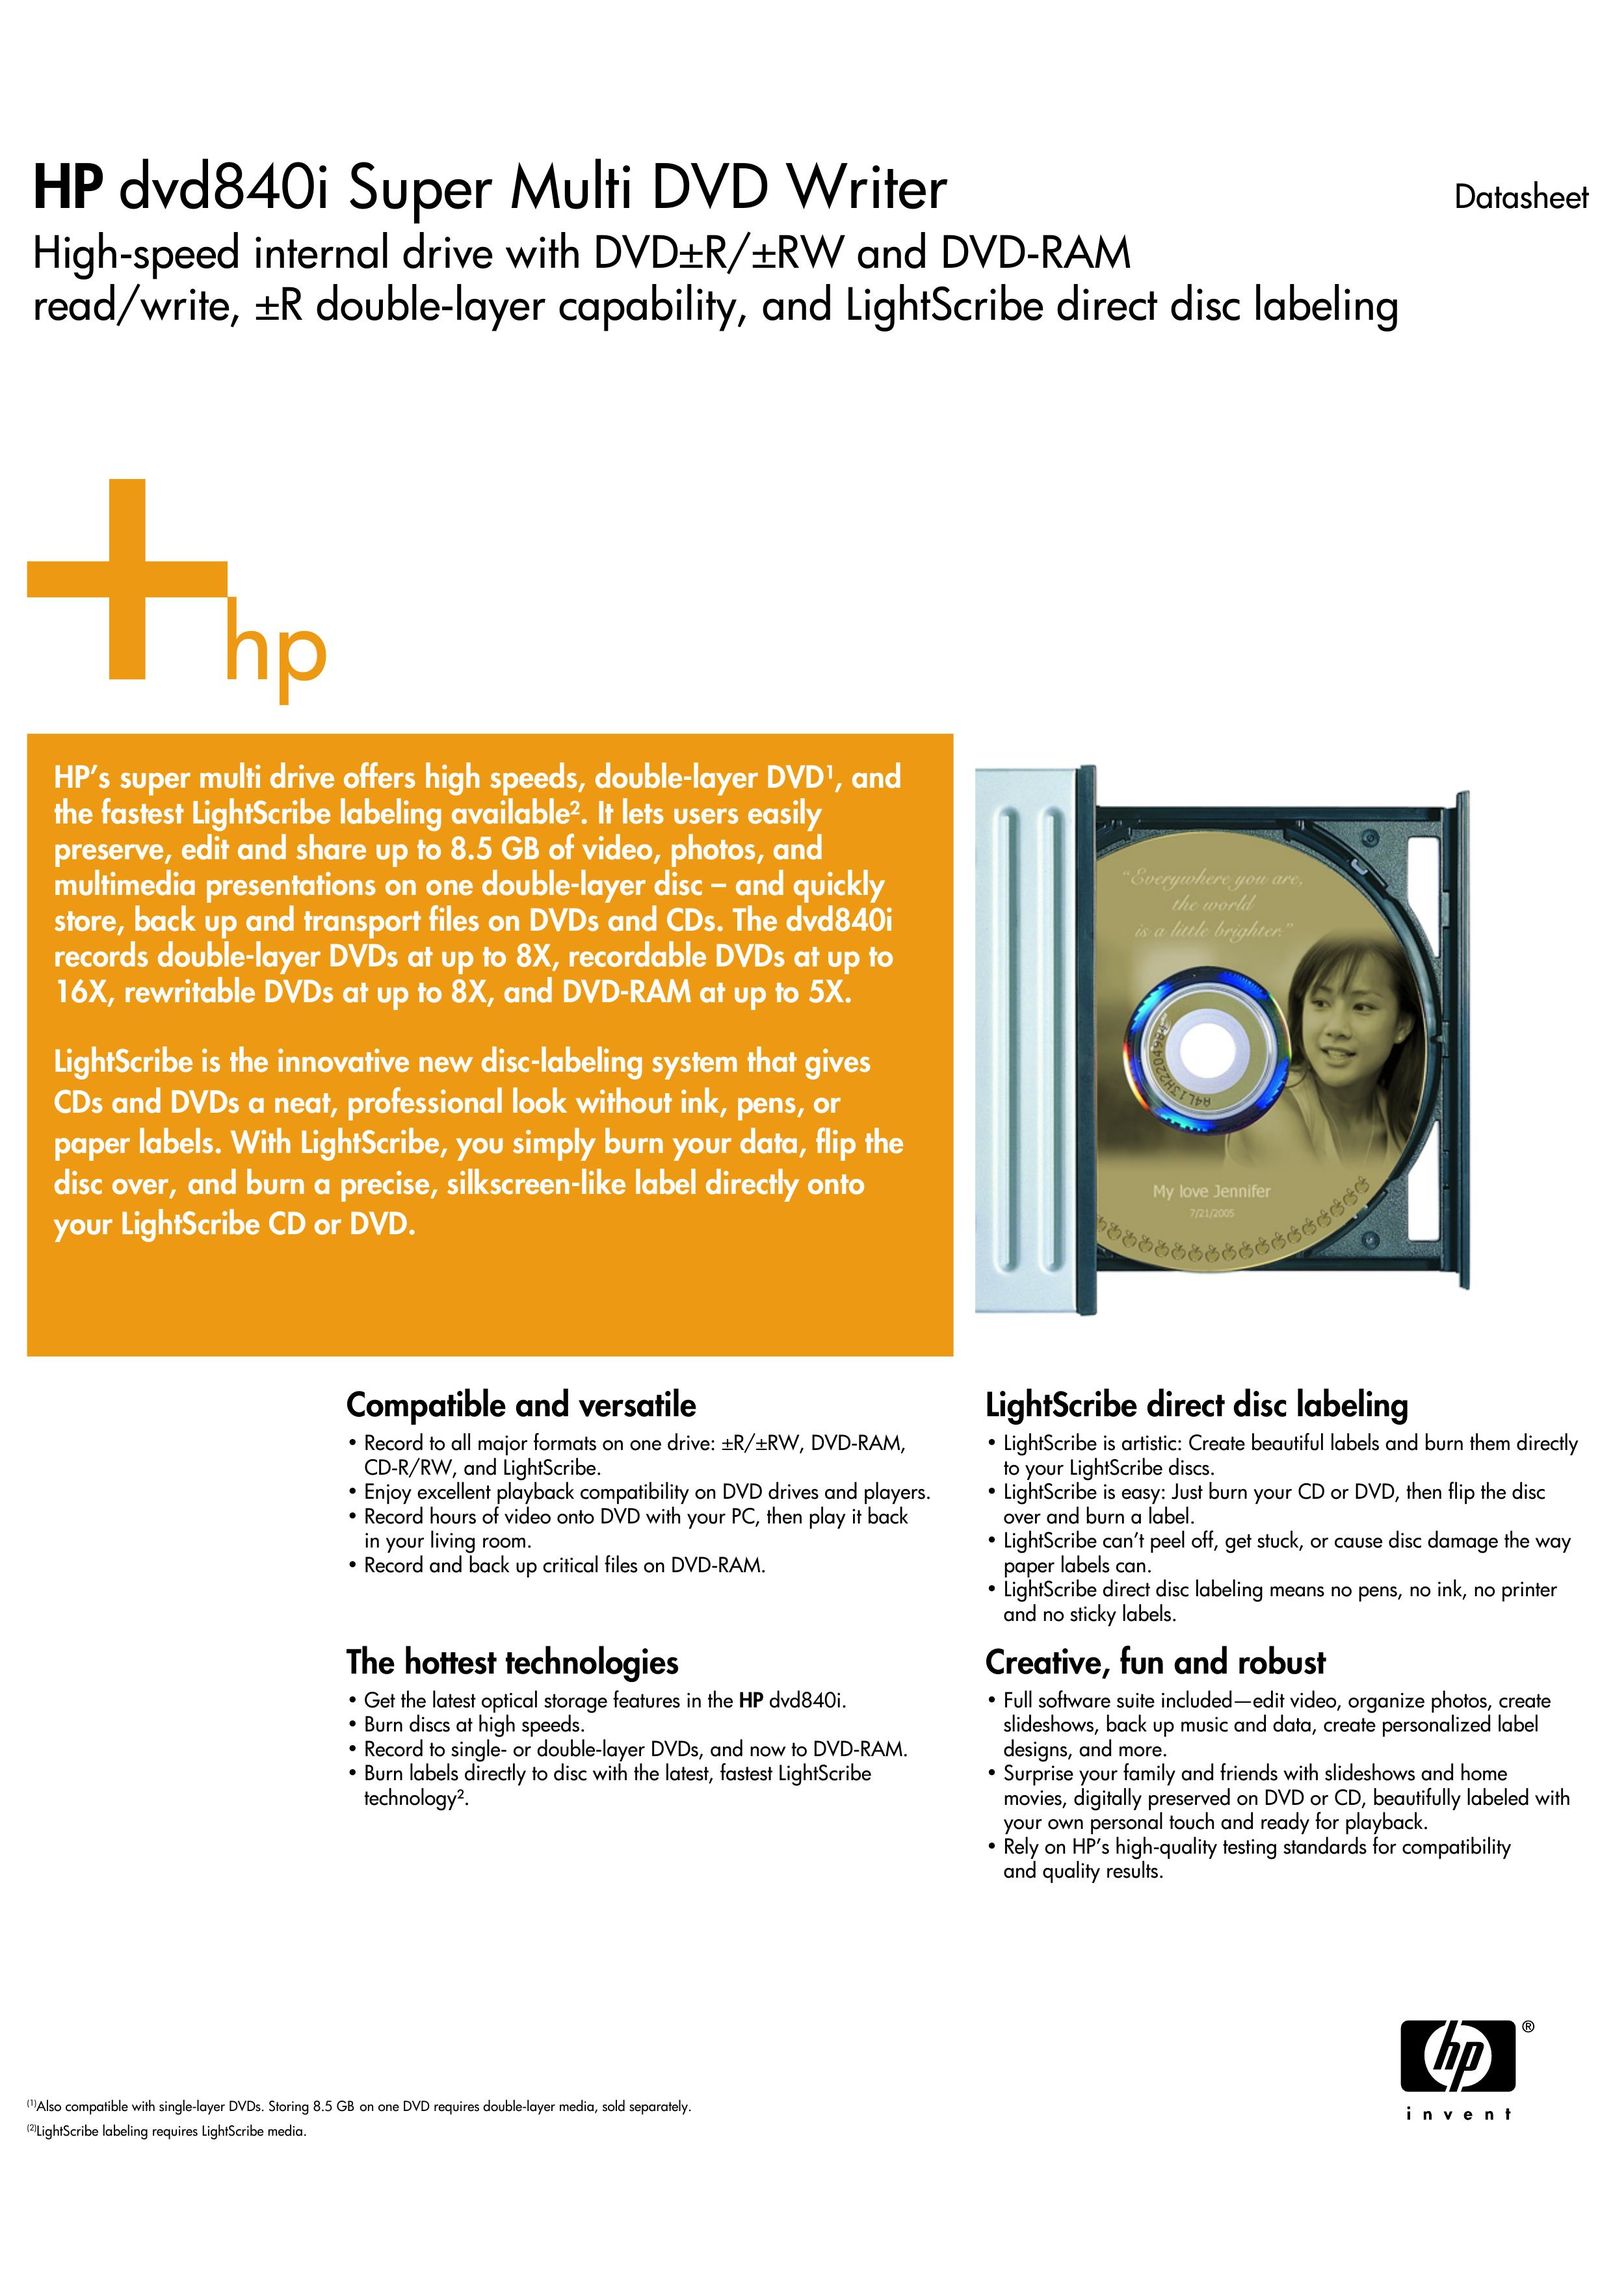 HP (Hewlett-Packard) dvd840i DVR User Manual